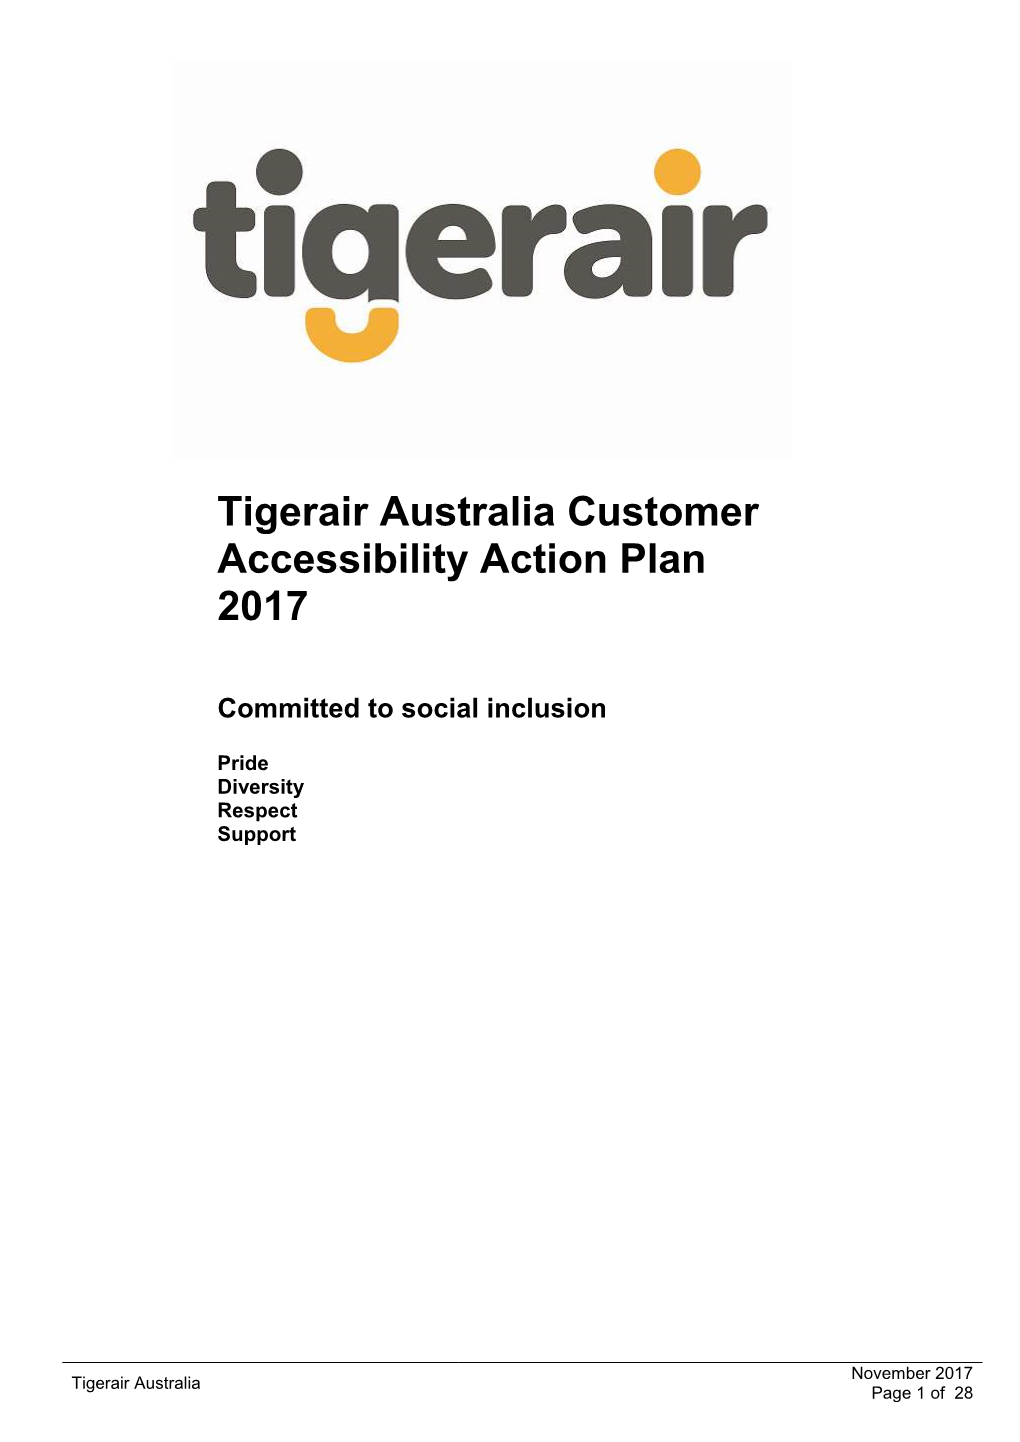 Tigerair Australia Customer Accessibility Action Plan 2017